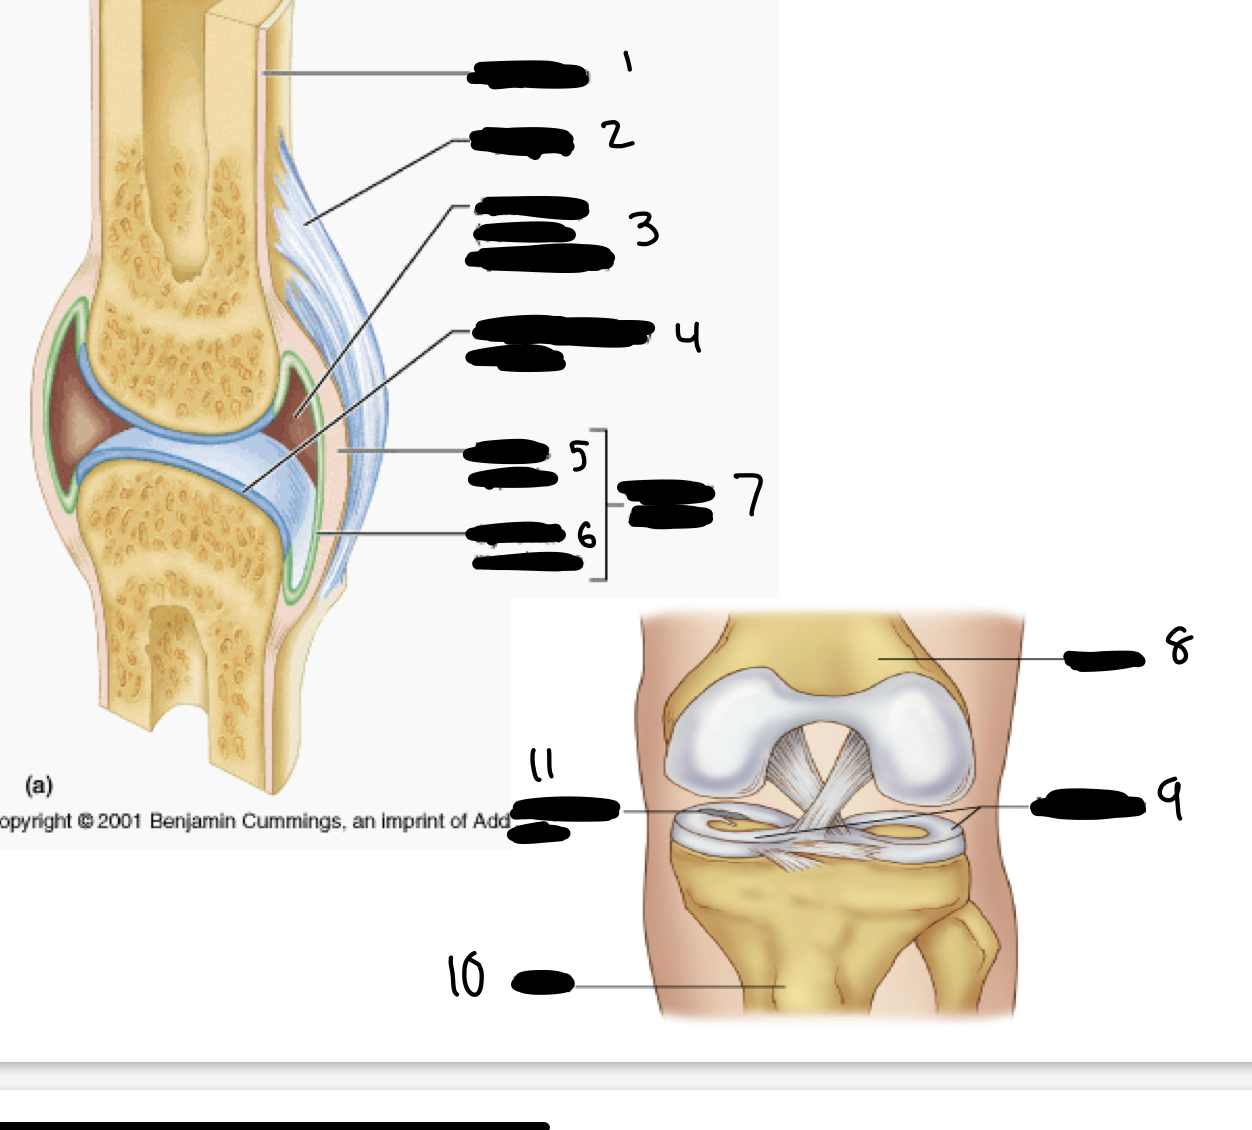 <ol><li><p>periosteum</p></li><li><p>ligament</p></li><li><p>joint cavity (contains synovial fluid)</p></li><li><p>articular cartilage (hyaline)</p></li><li><p>fibrous capsule</p></li><li><p>synovial membrane</p></li><li><p>articular capsule</p></li><li><p>femur</p></li><li><p>meniscus</p></li><li><p>tibia</p></li><li><p>meniscal tear</p></li></ol>